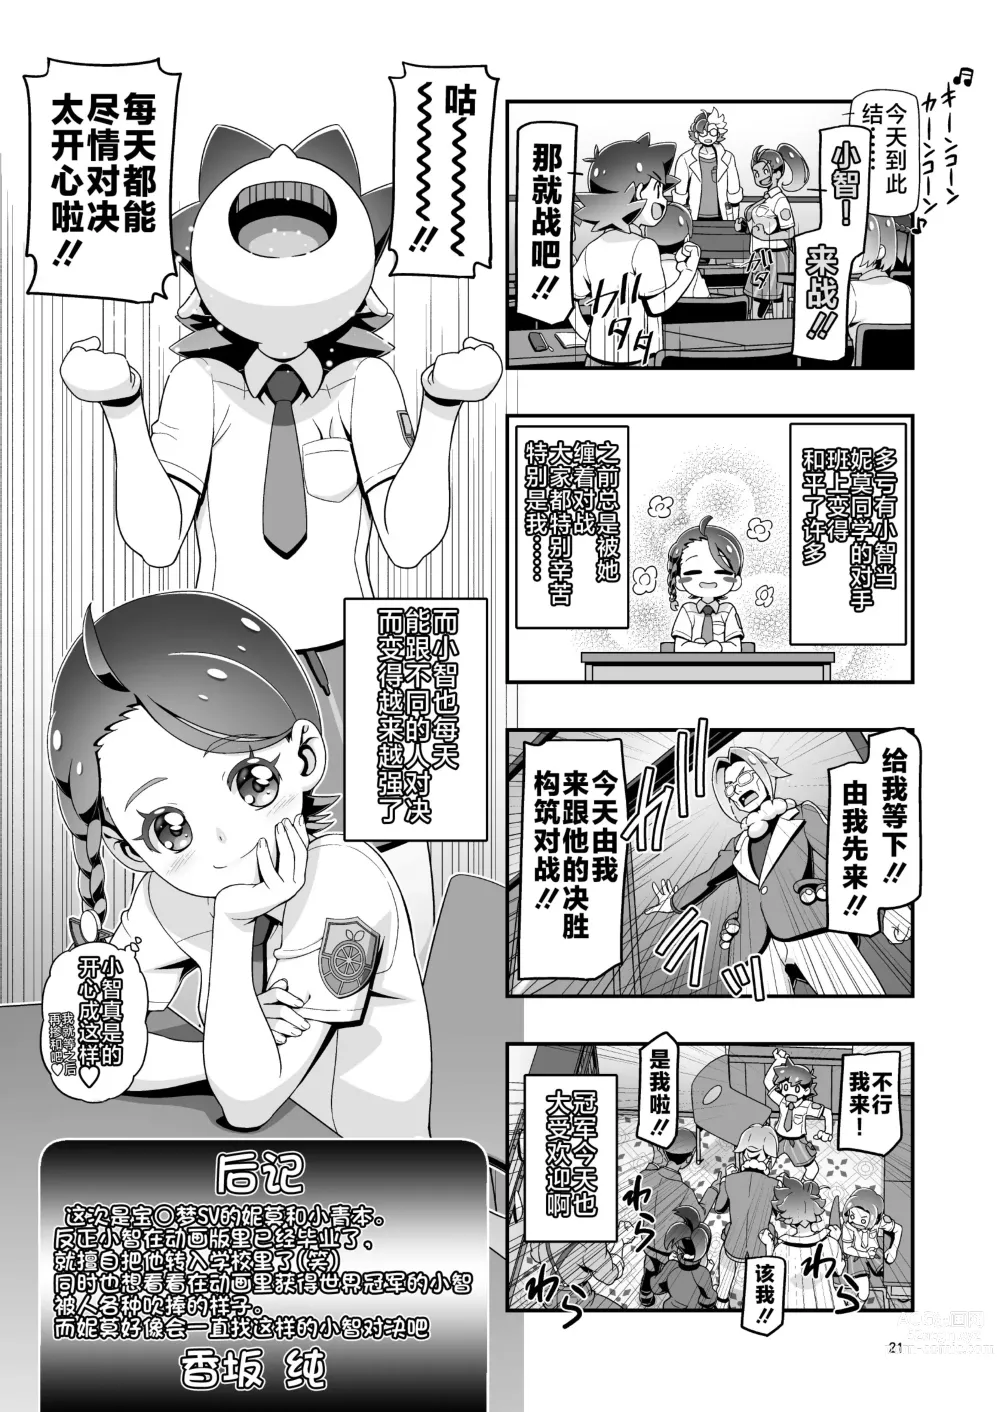 Page 21 of doujinshi ] PM GALS SV Nemo & Aoi